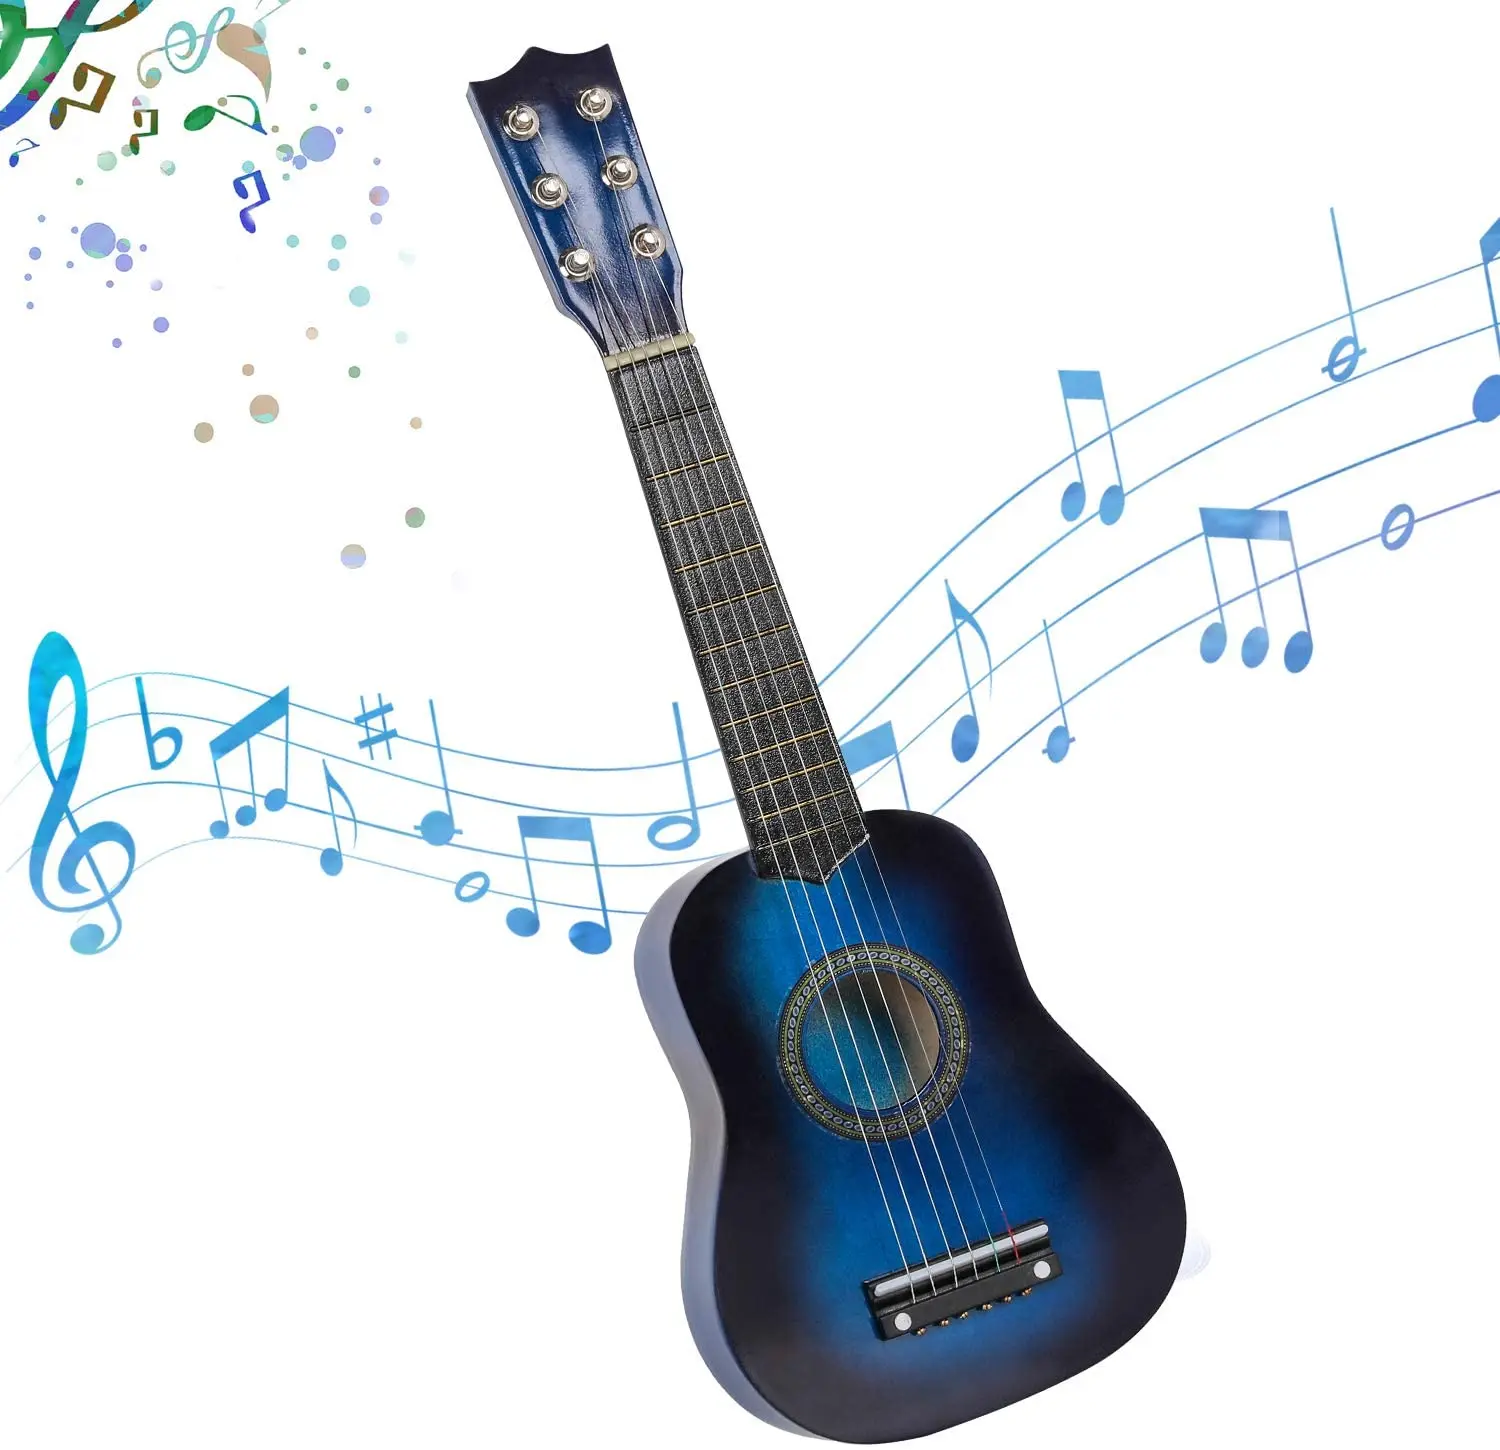 

Educational Wood Handmade Professional 21 inches Ukulele Acoustic Guitar Musical Instrument Toys for Kids, Black